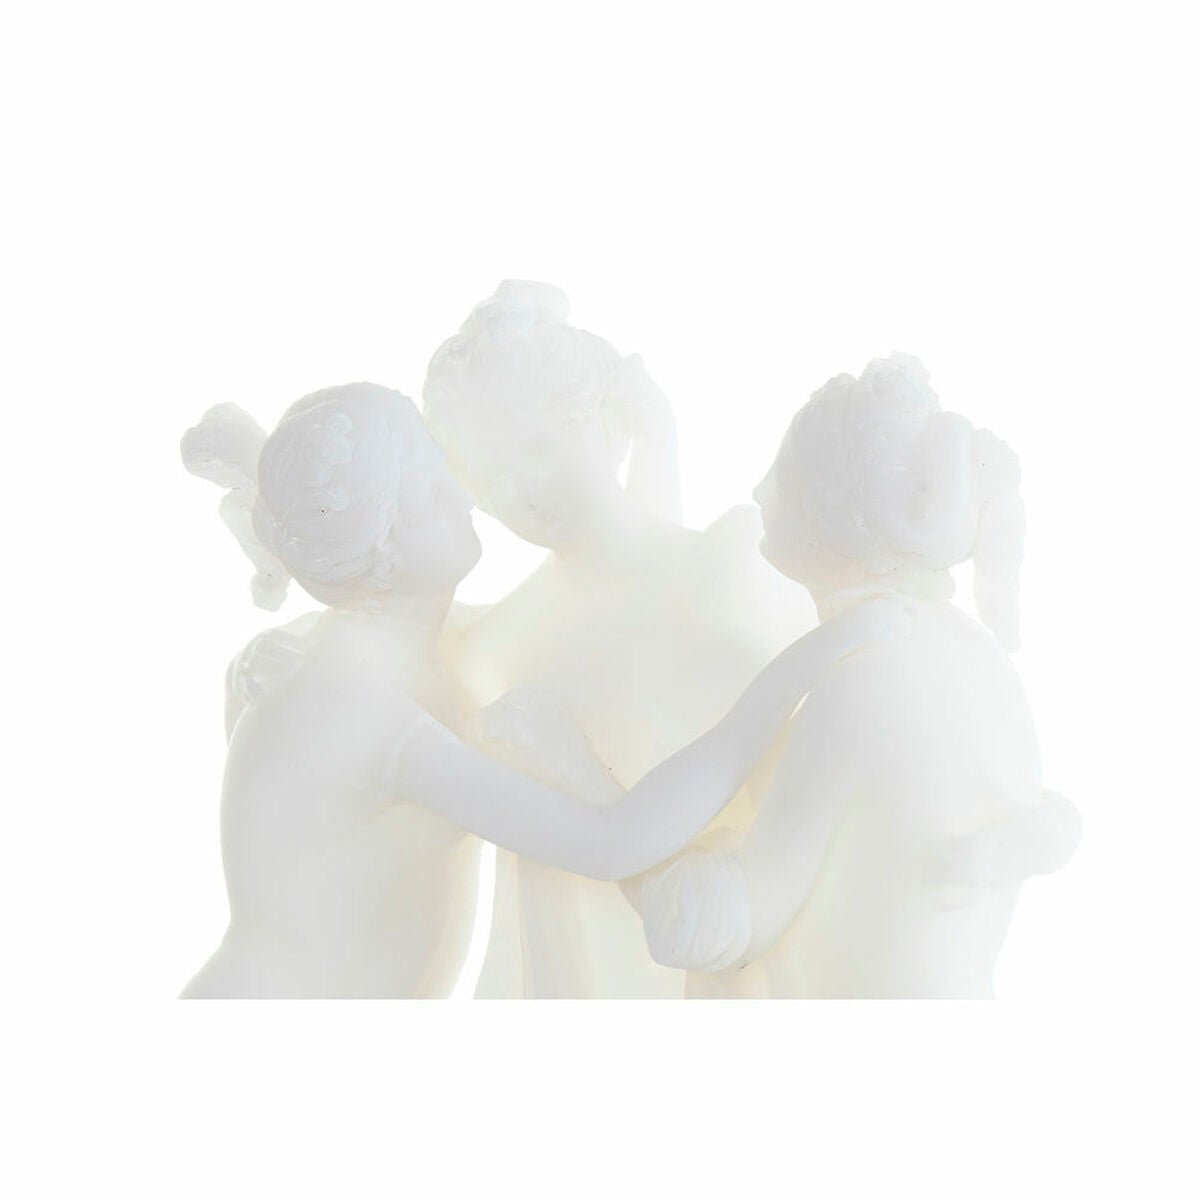 Three woman 25 x 11 x 40.5 cm